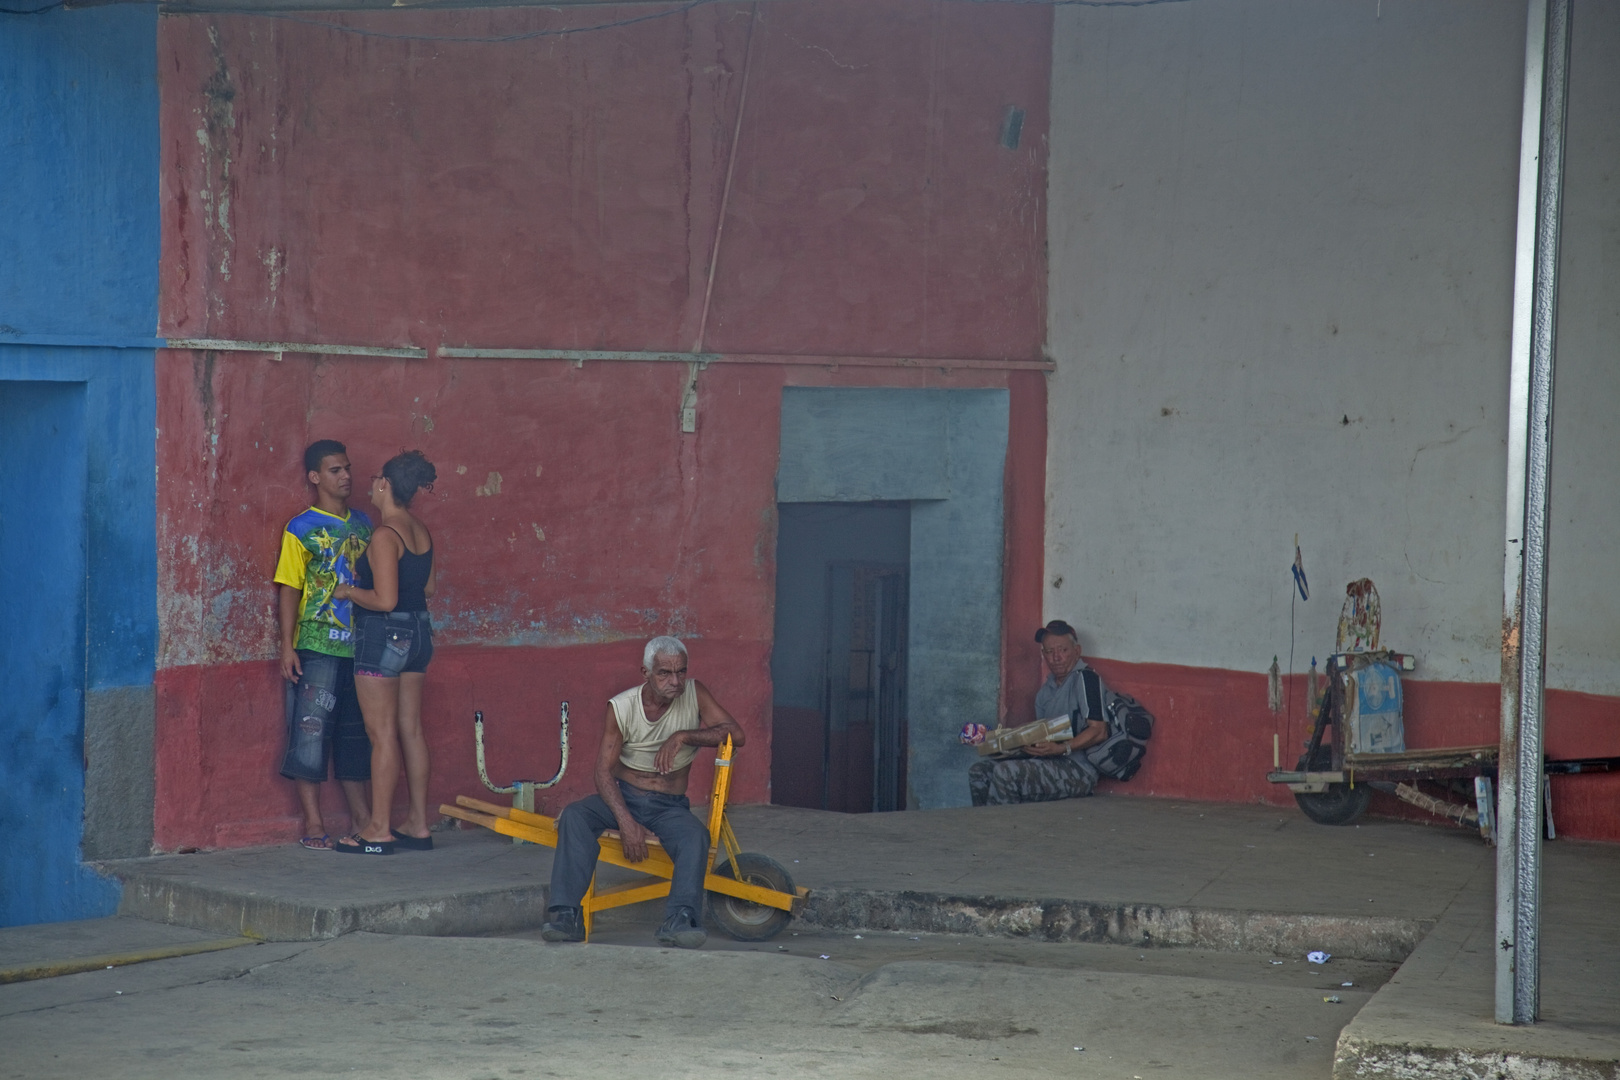 Am Busbahnhof in Trinidad, Cuba